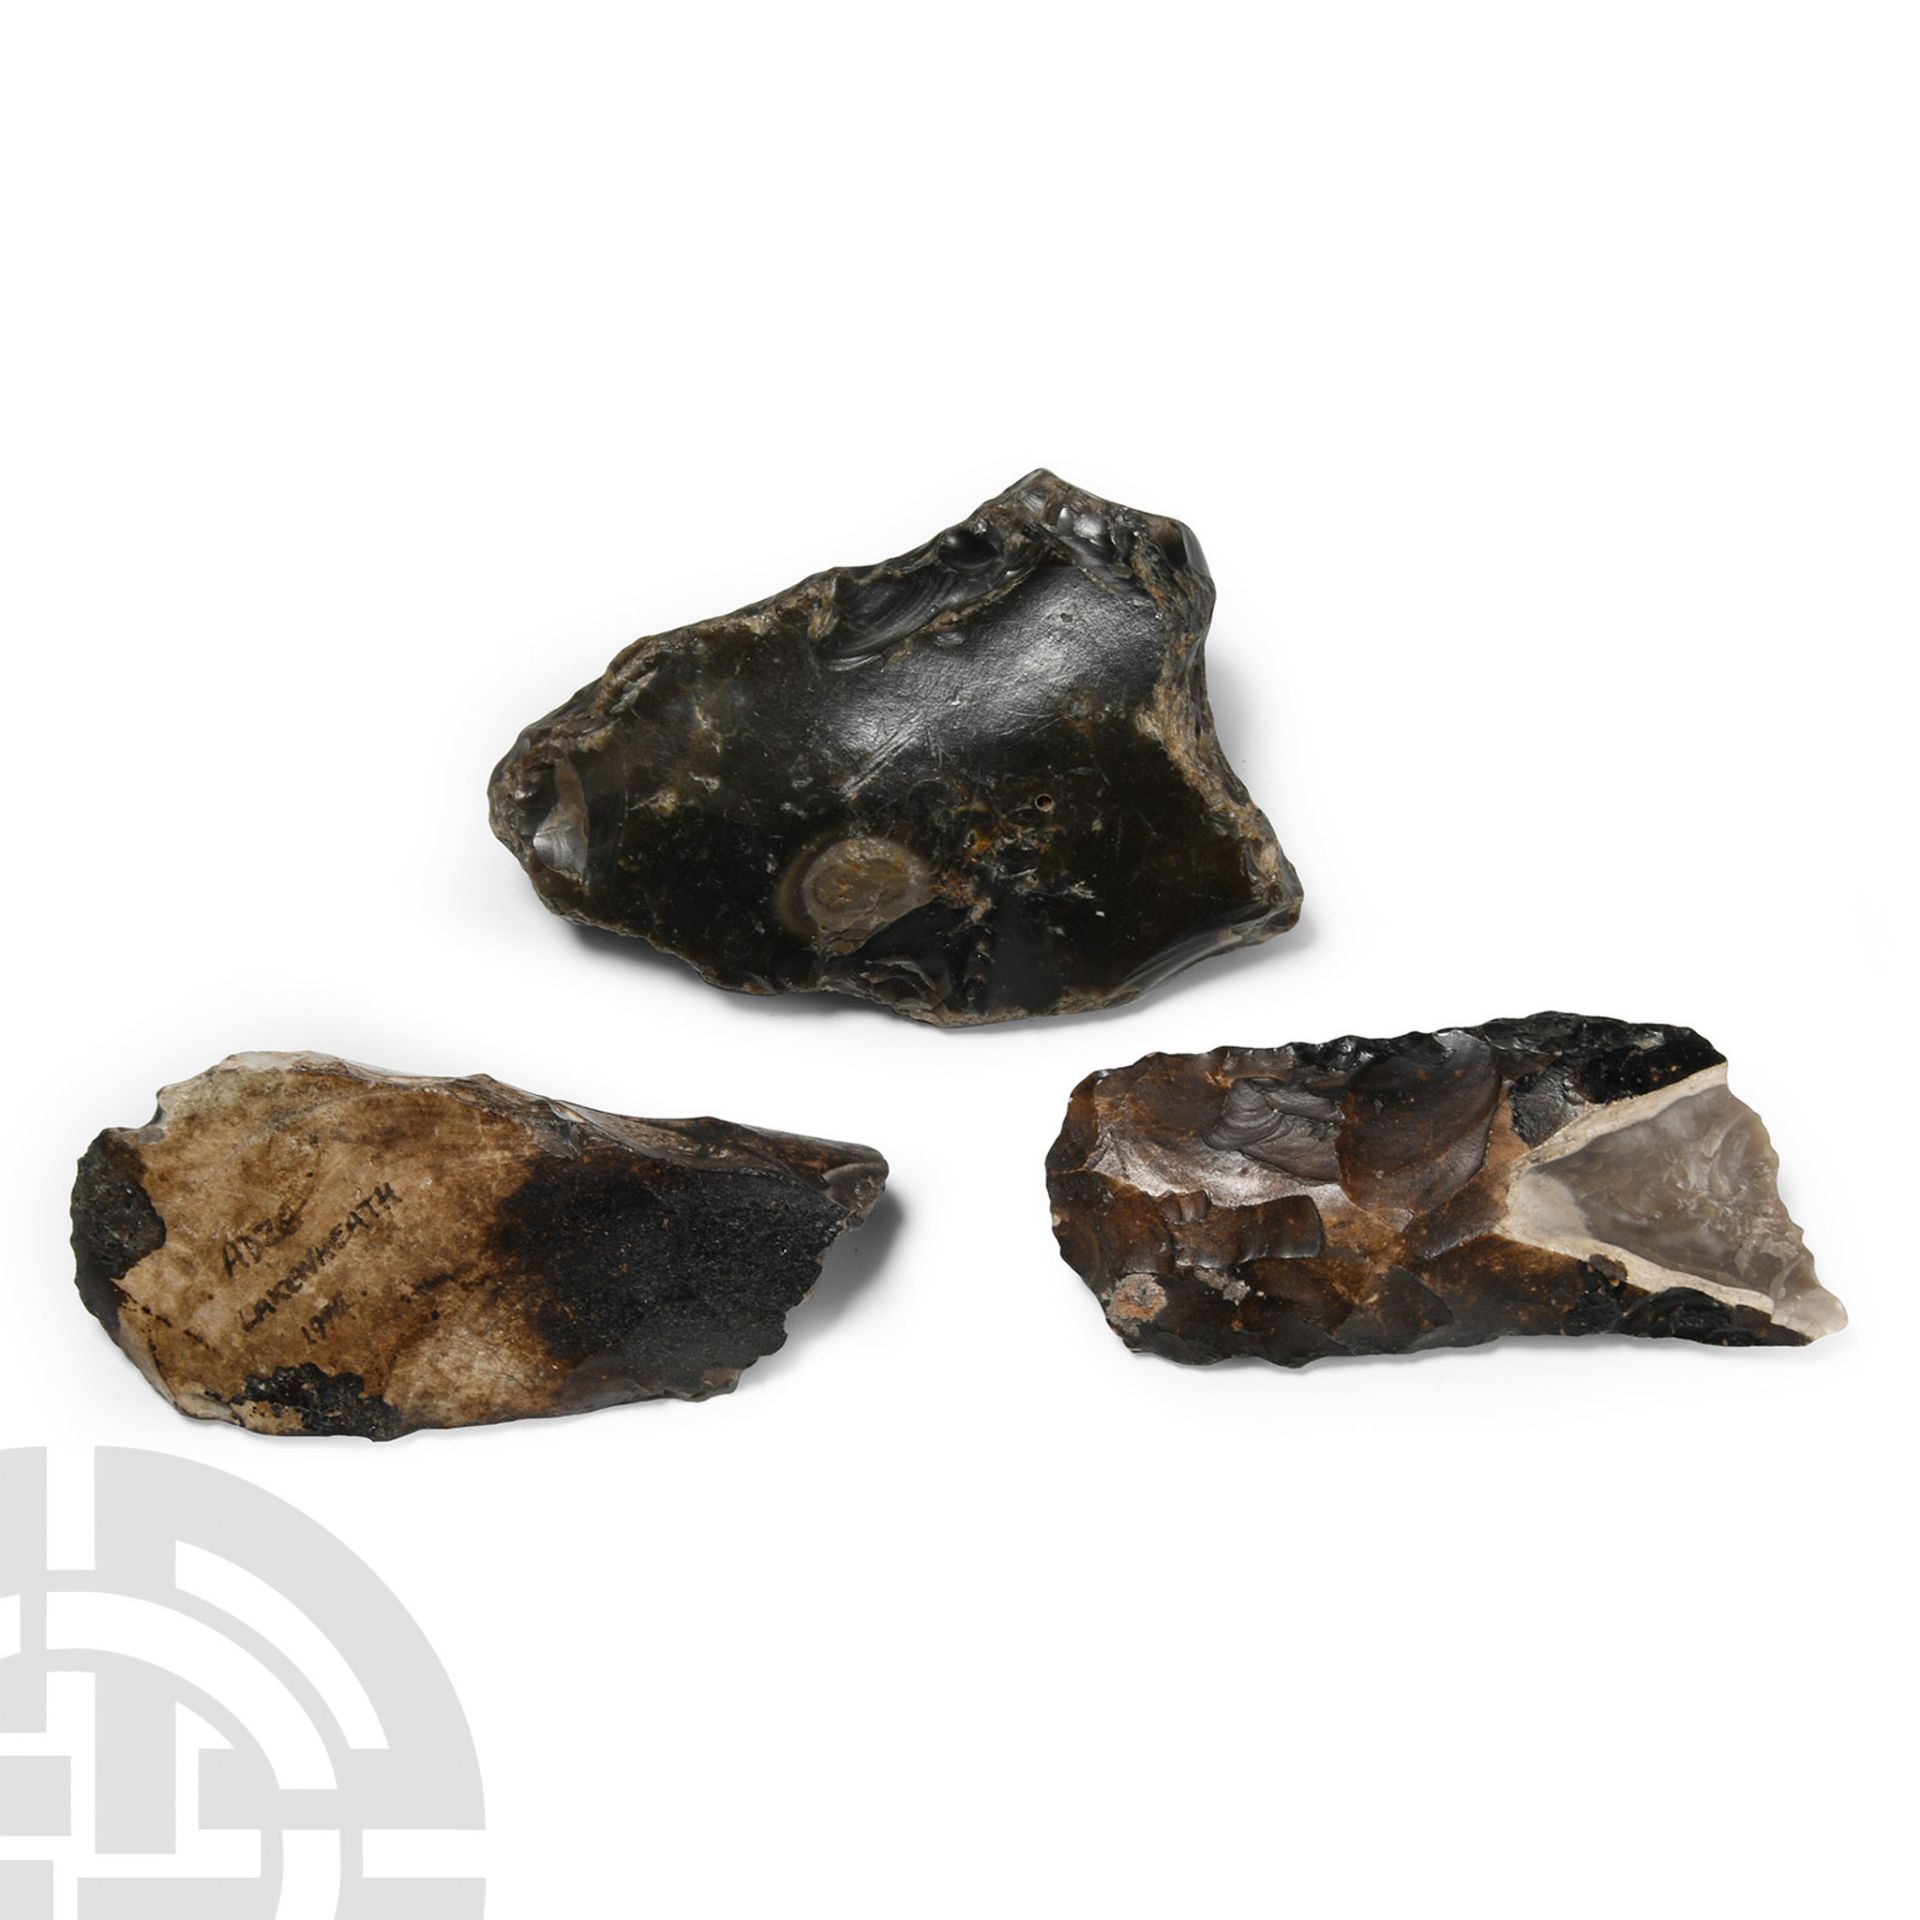 Stone Age Lakenheath Knapped Stone Tool Group